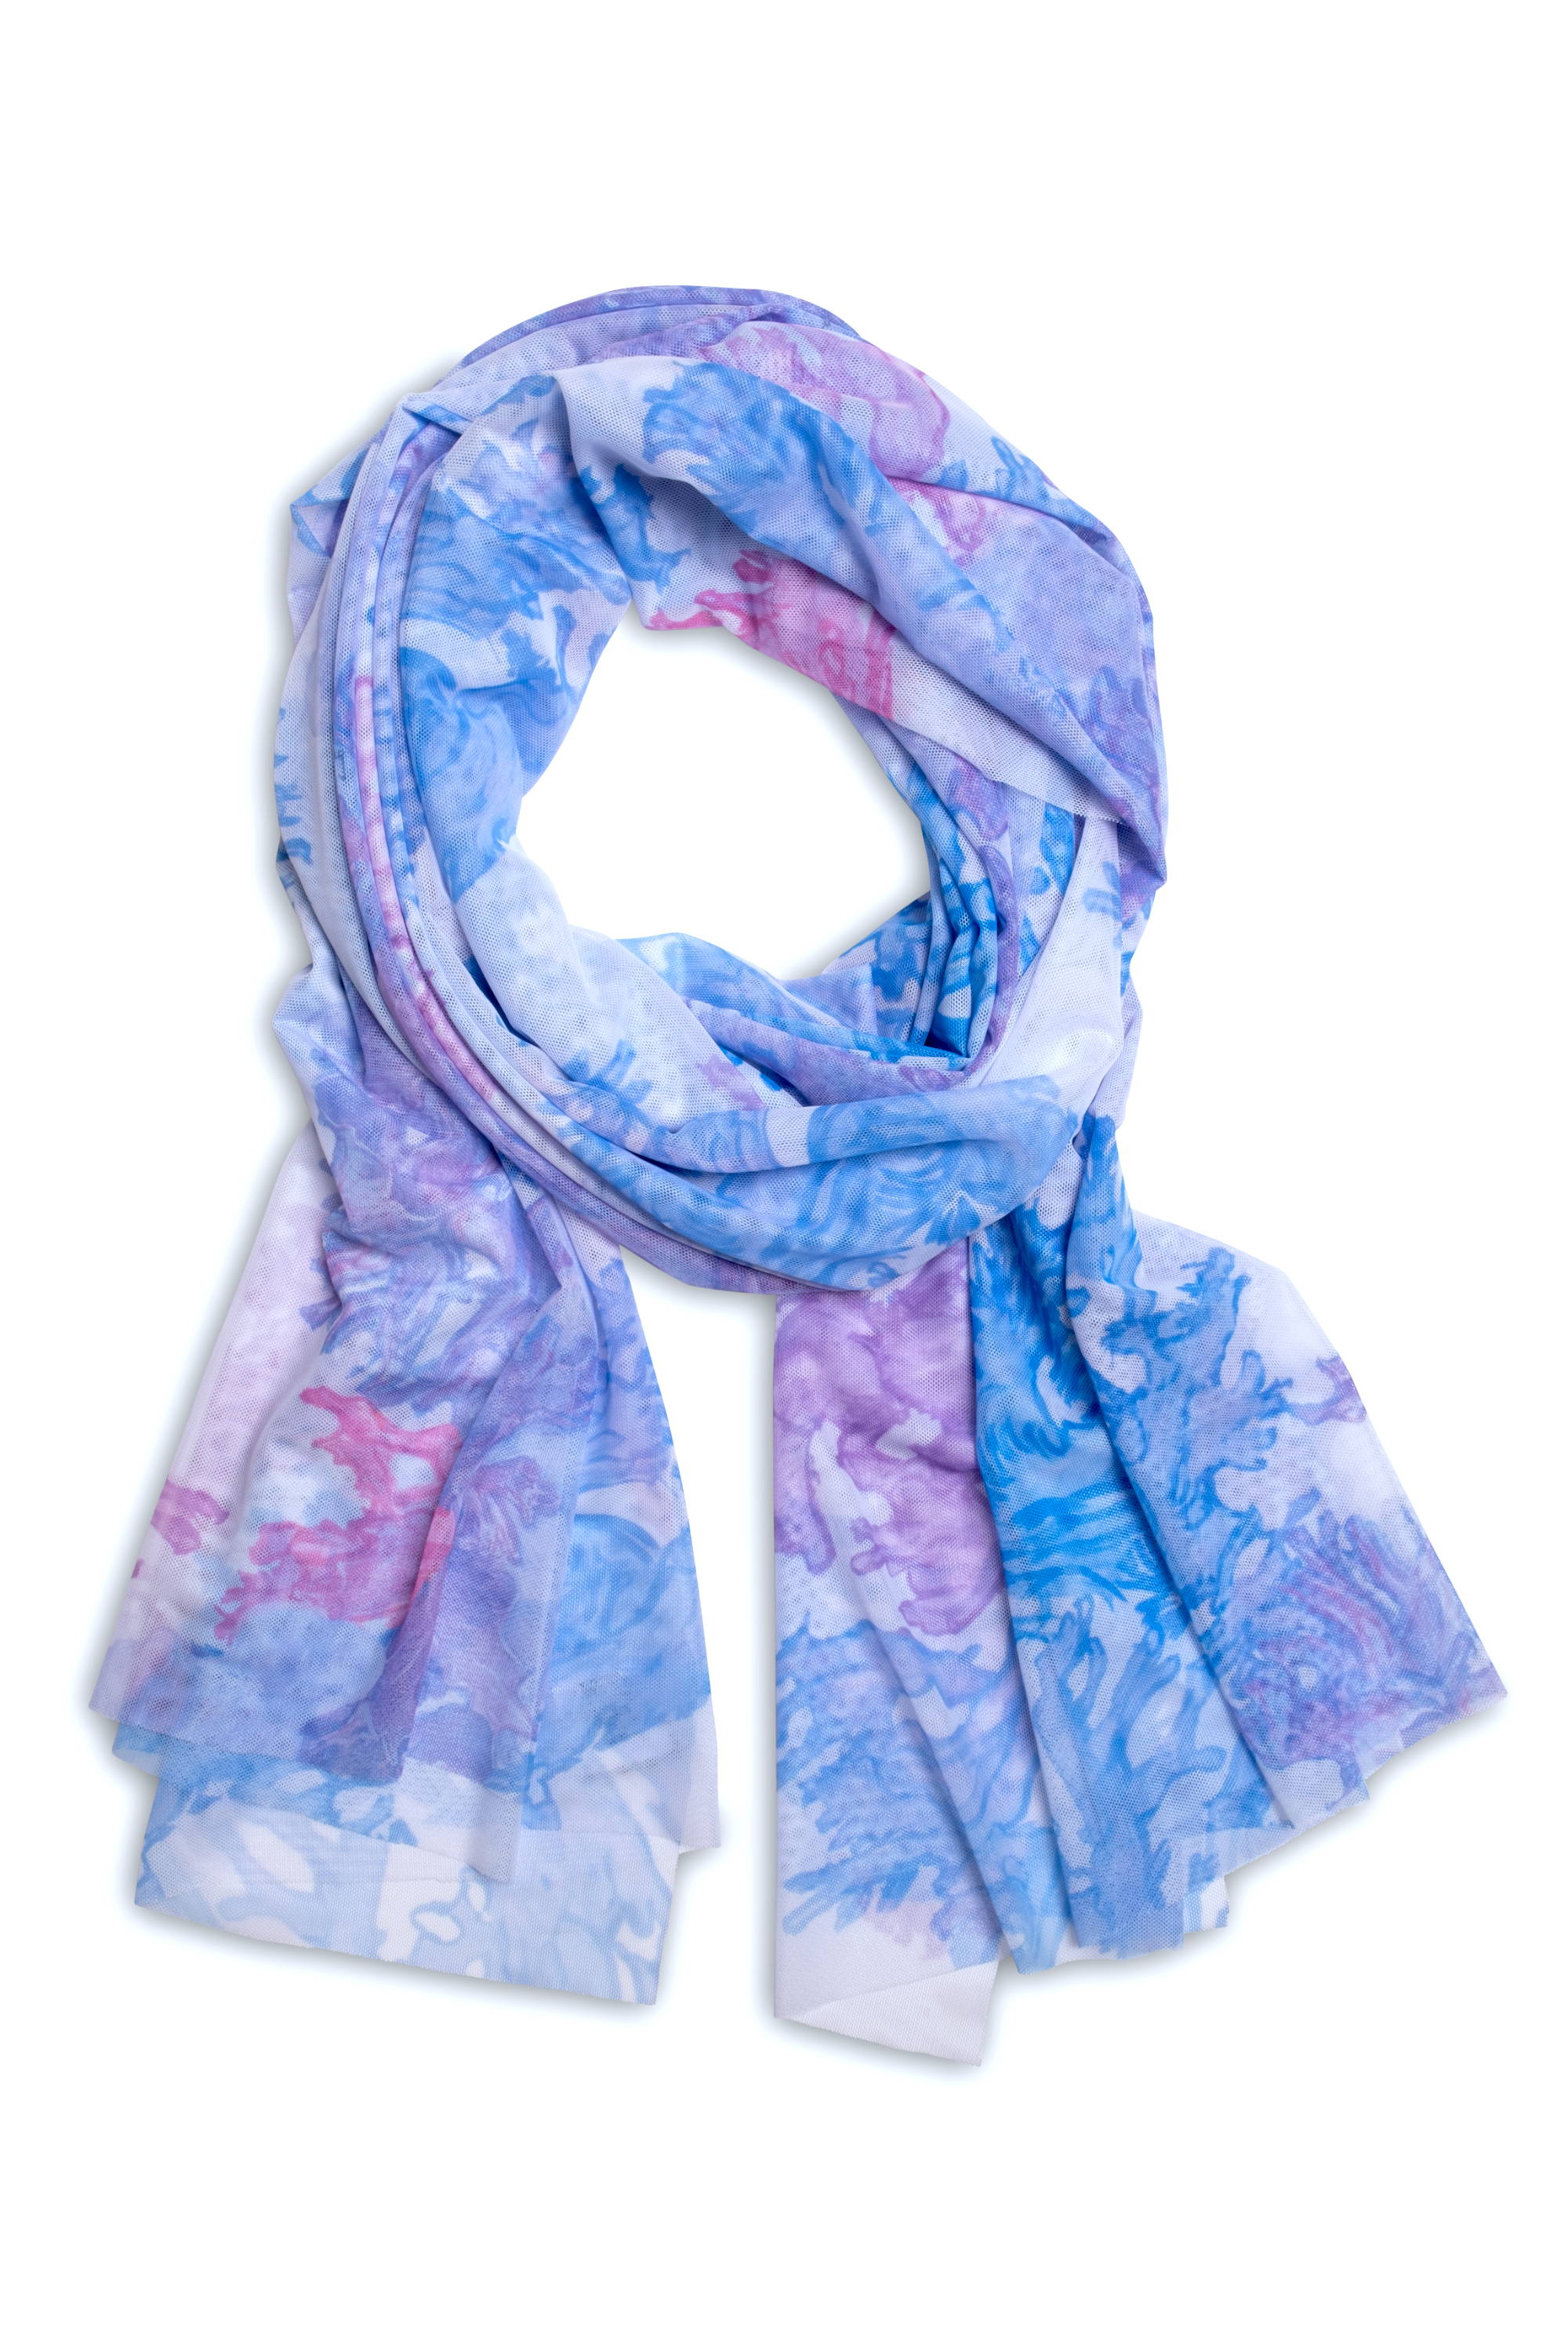 Mesh shawl scarf in a purple blue coral print by Ala von Auersperg